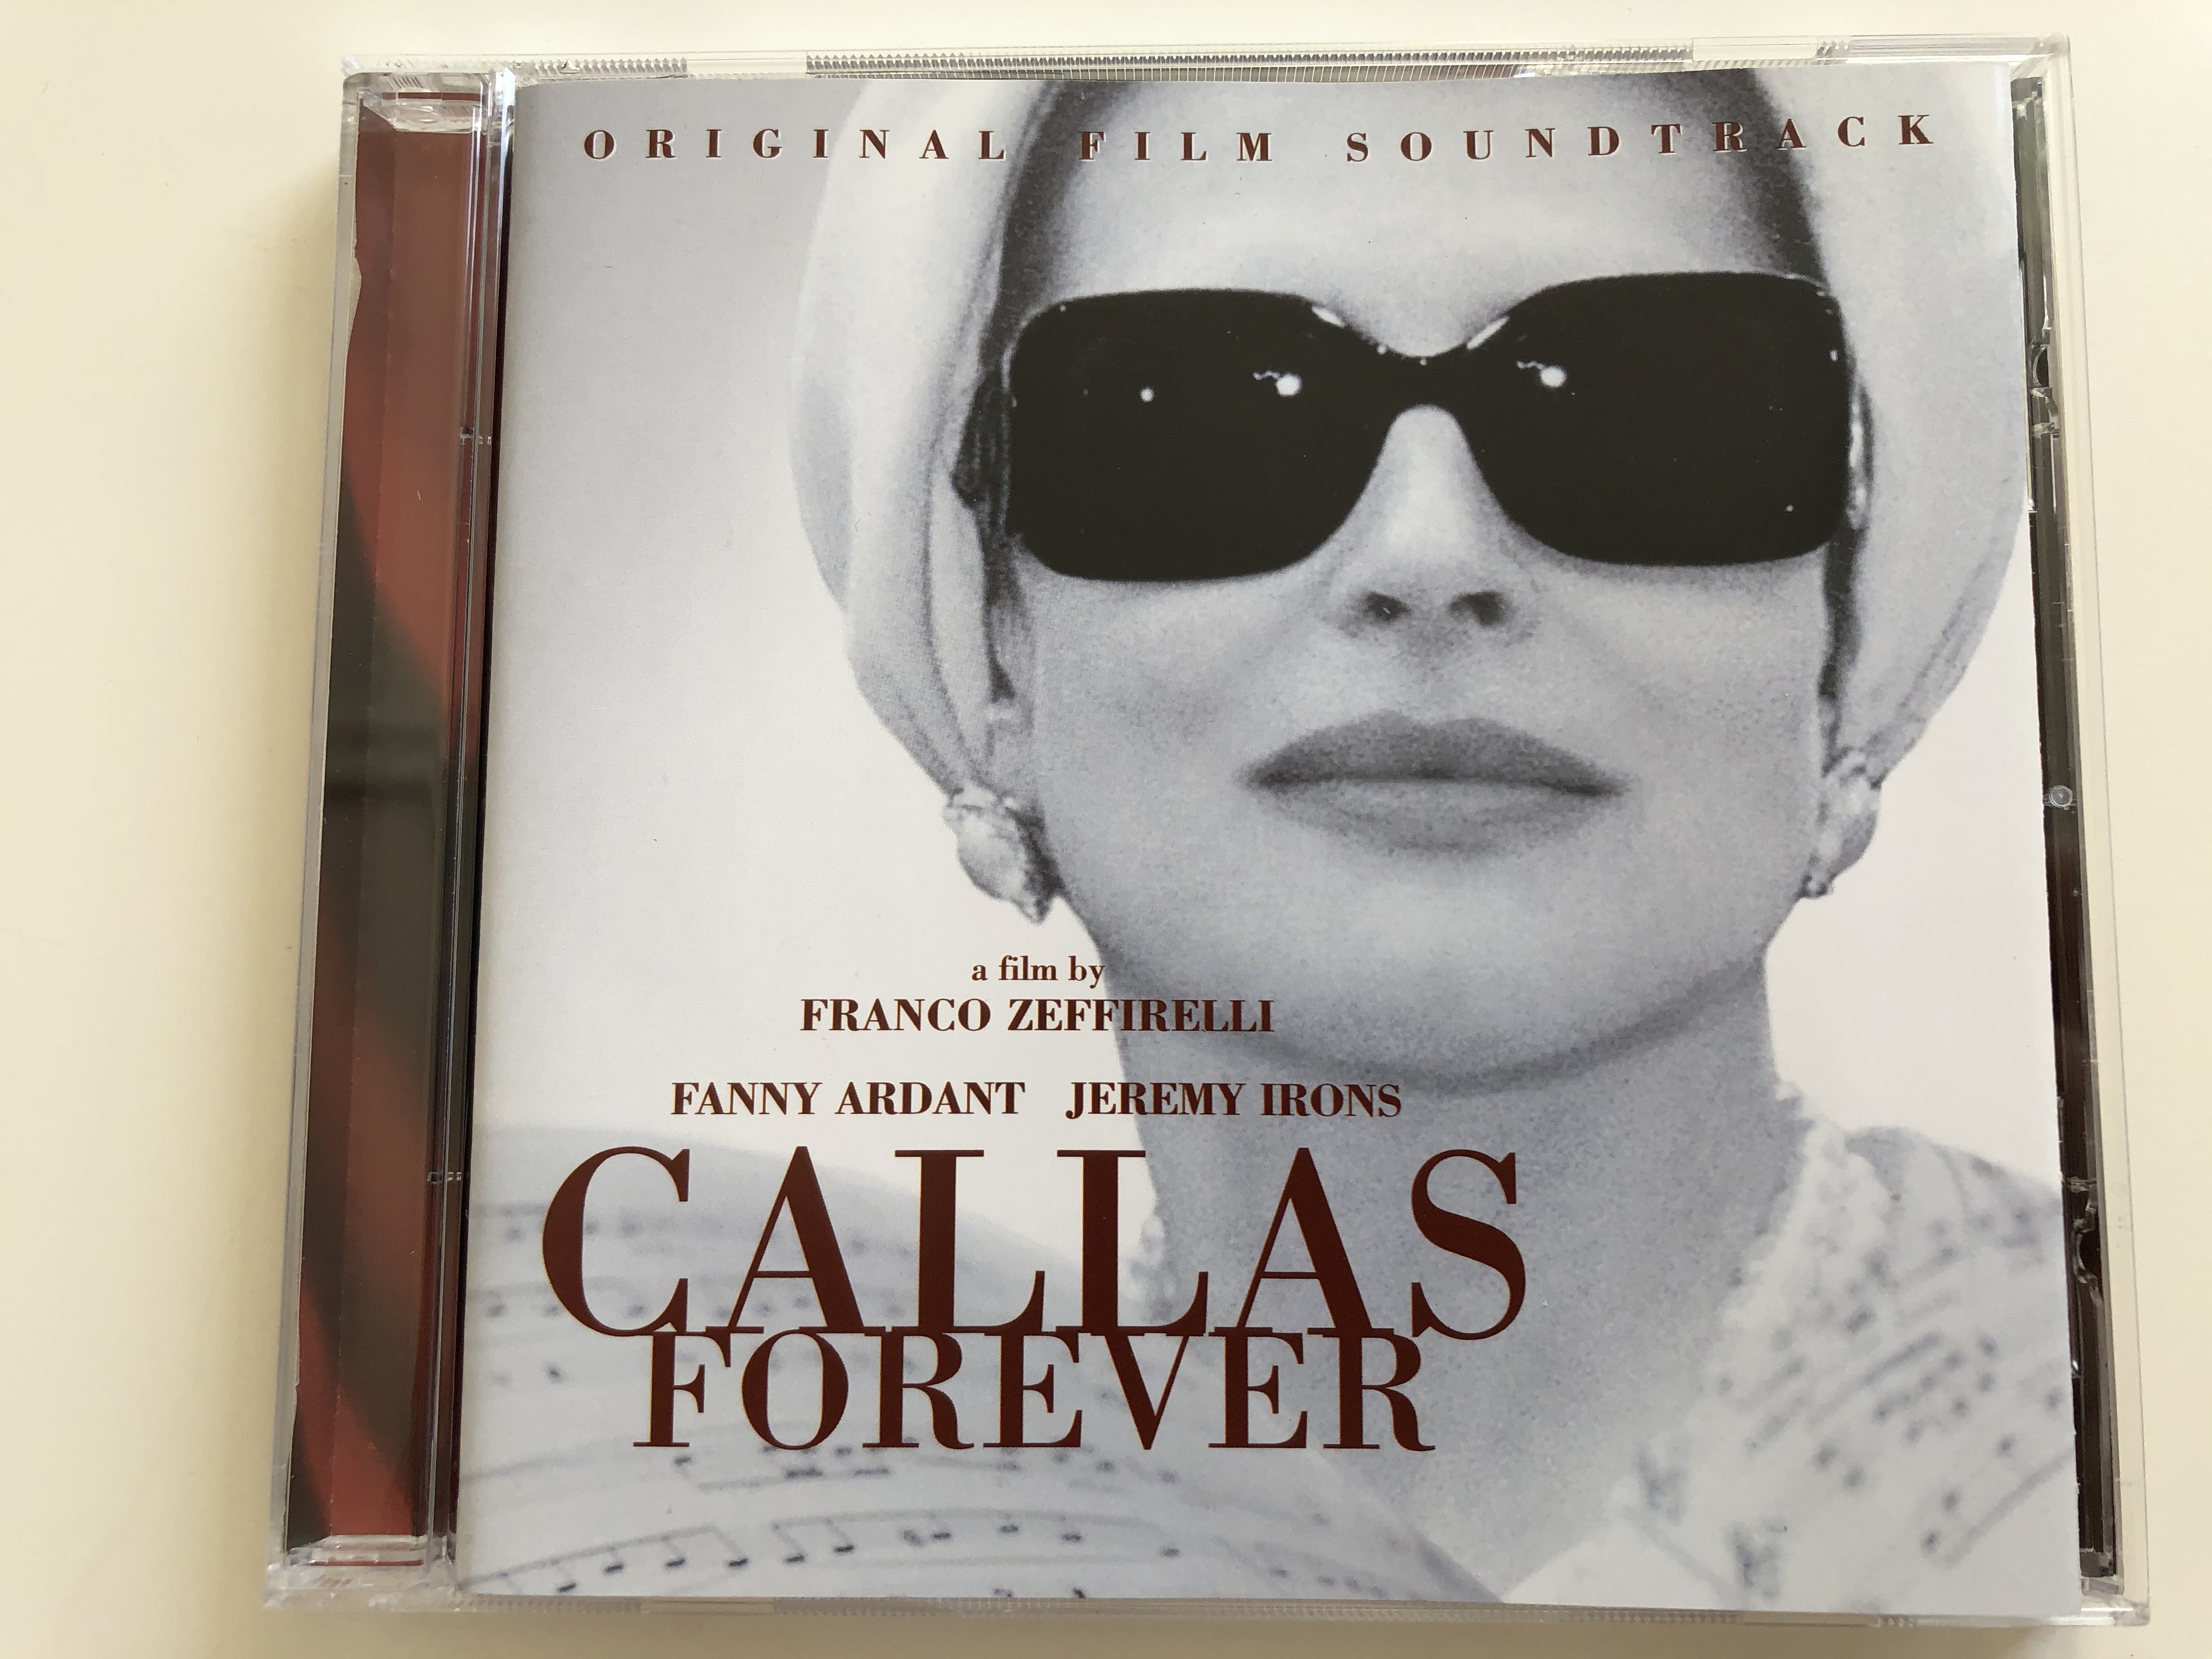 callas-forever-original-film-soundtrack-a-film-by-franco-zeffirelli-fanny-ardant-jeremy-irons-emi-audio-cd-2002-mono-stereo-5-57396-2-1-.jpg